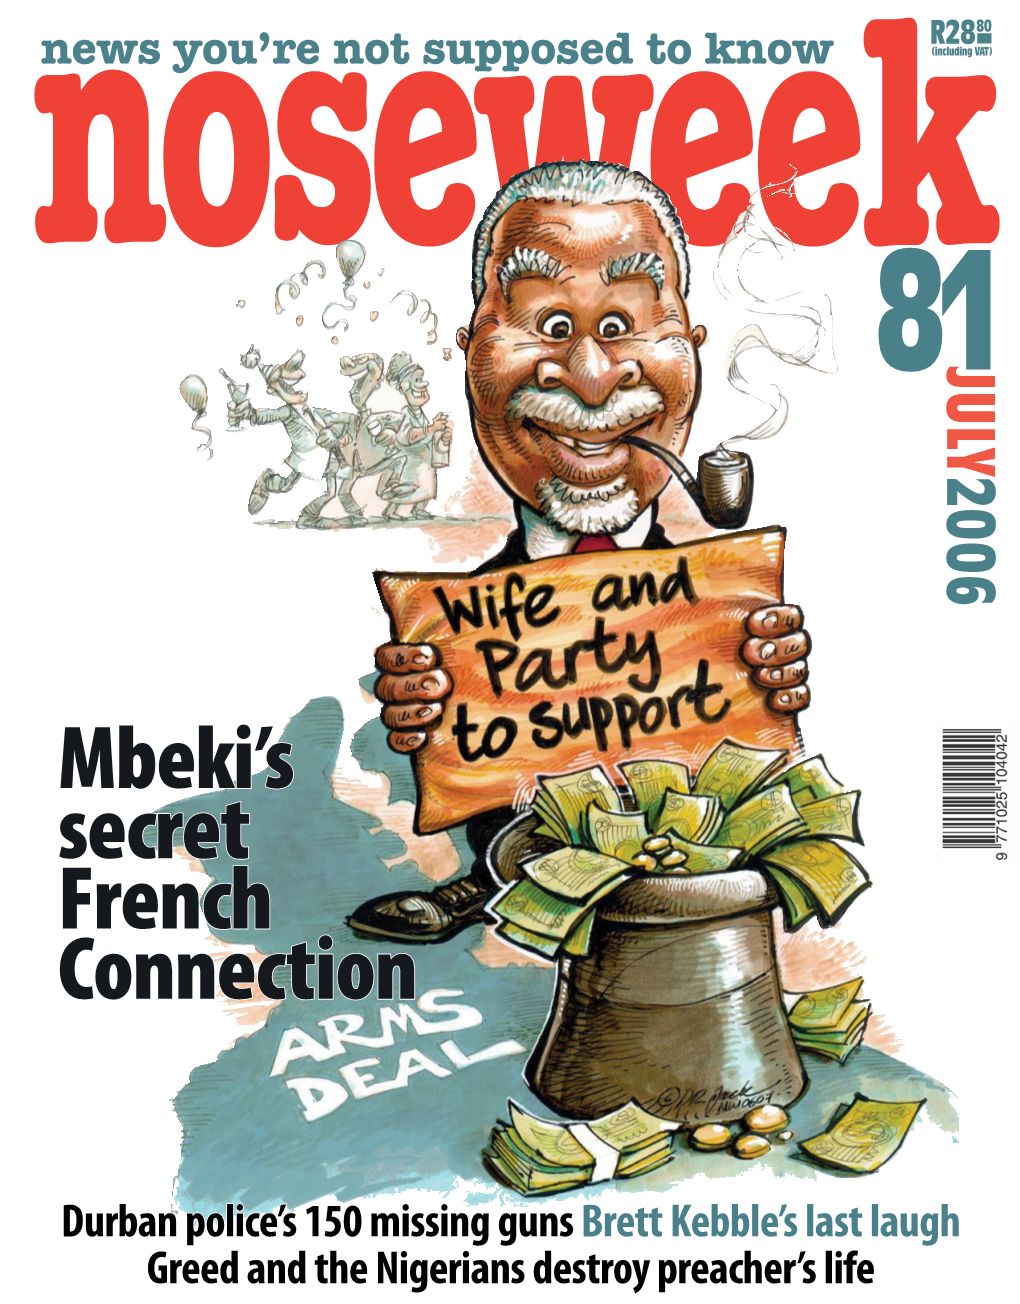 Mbeki's Secret French Connection